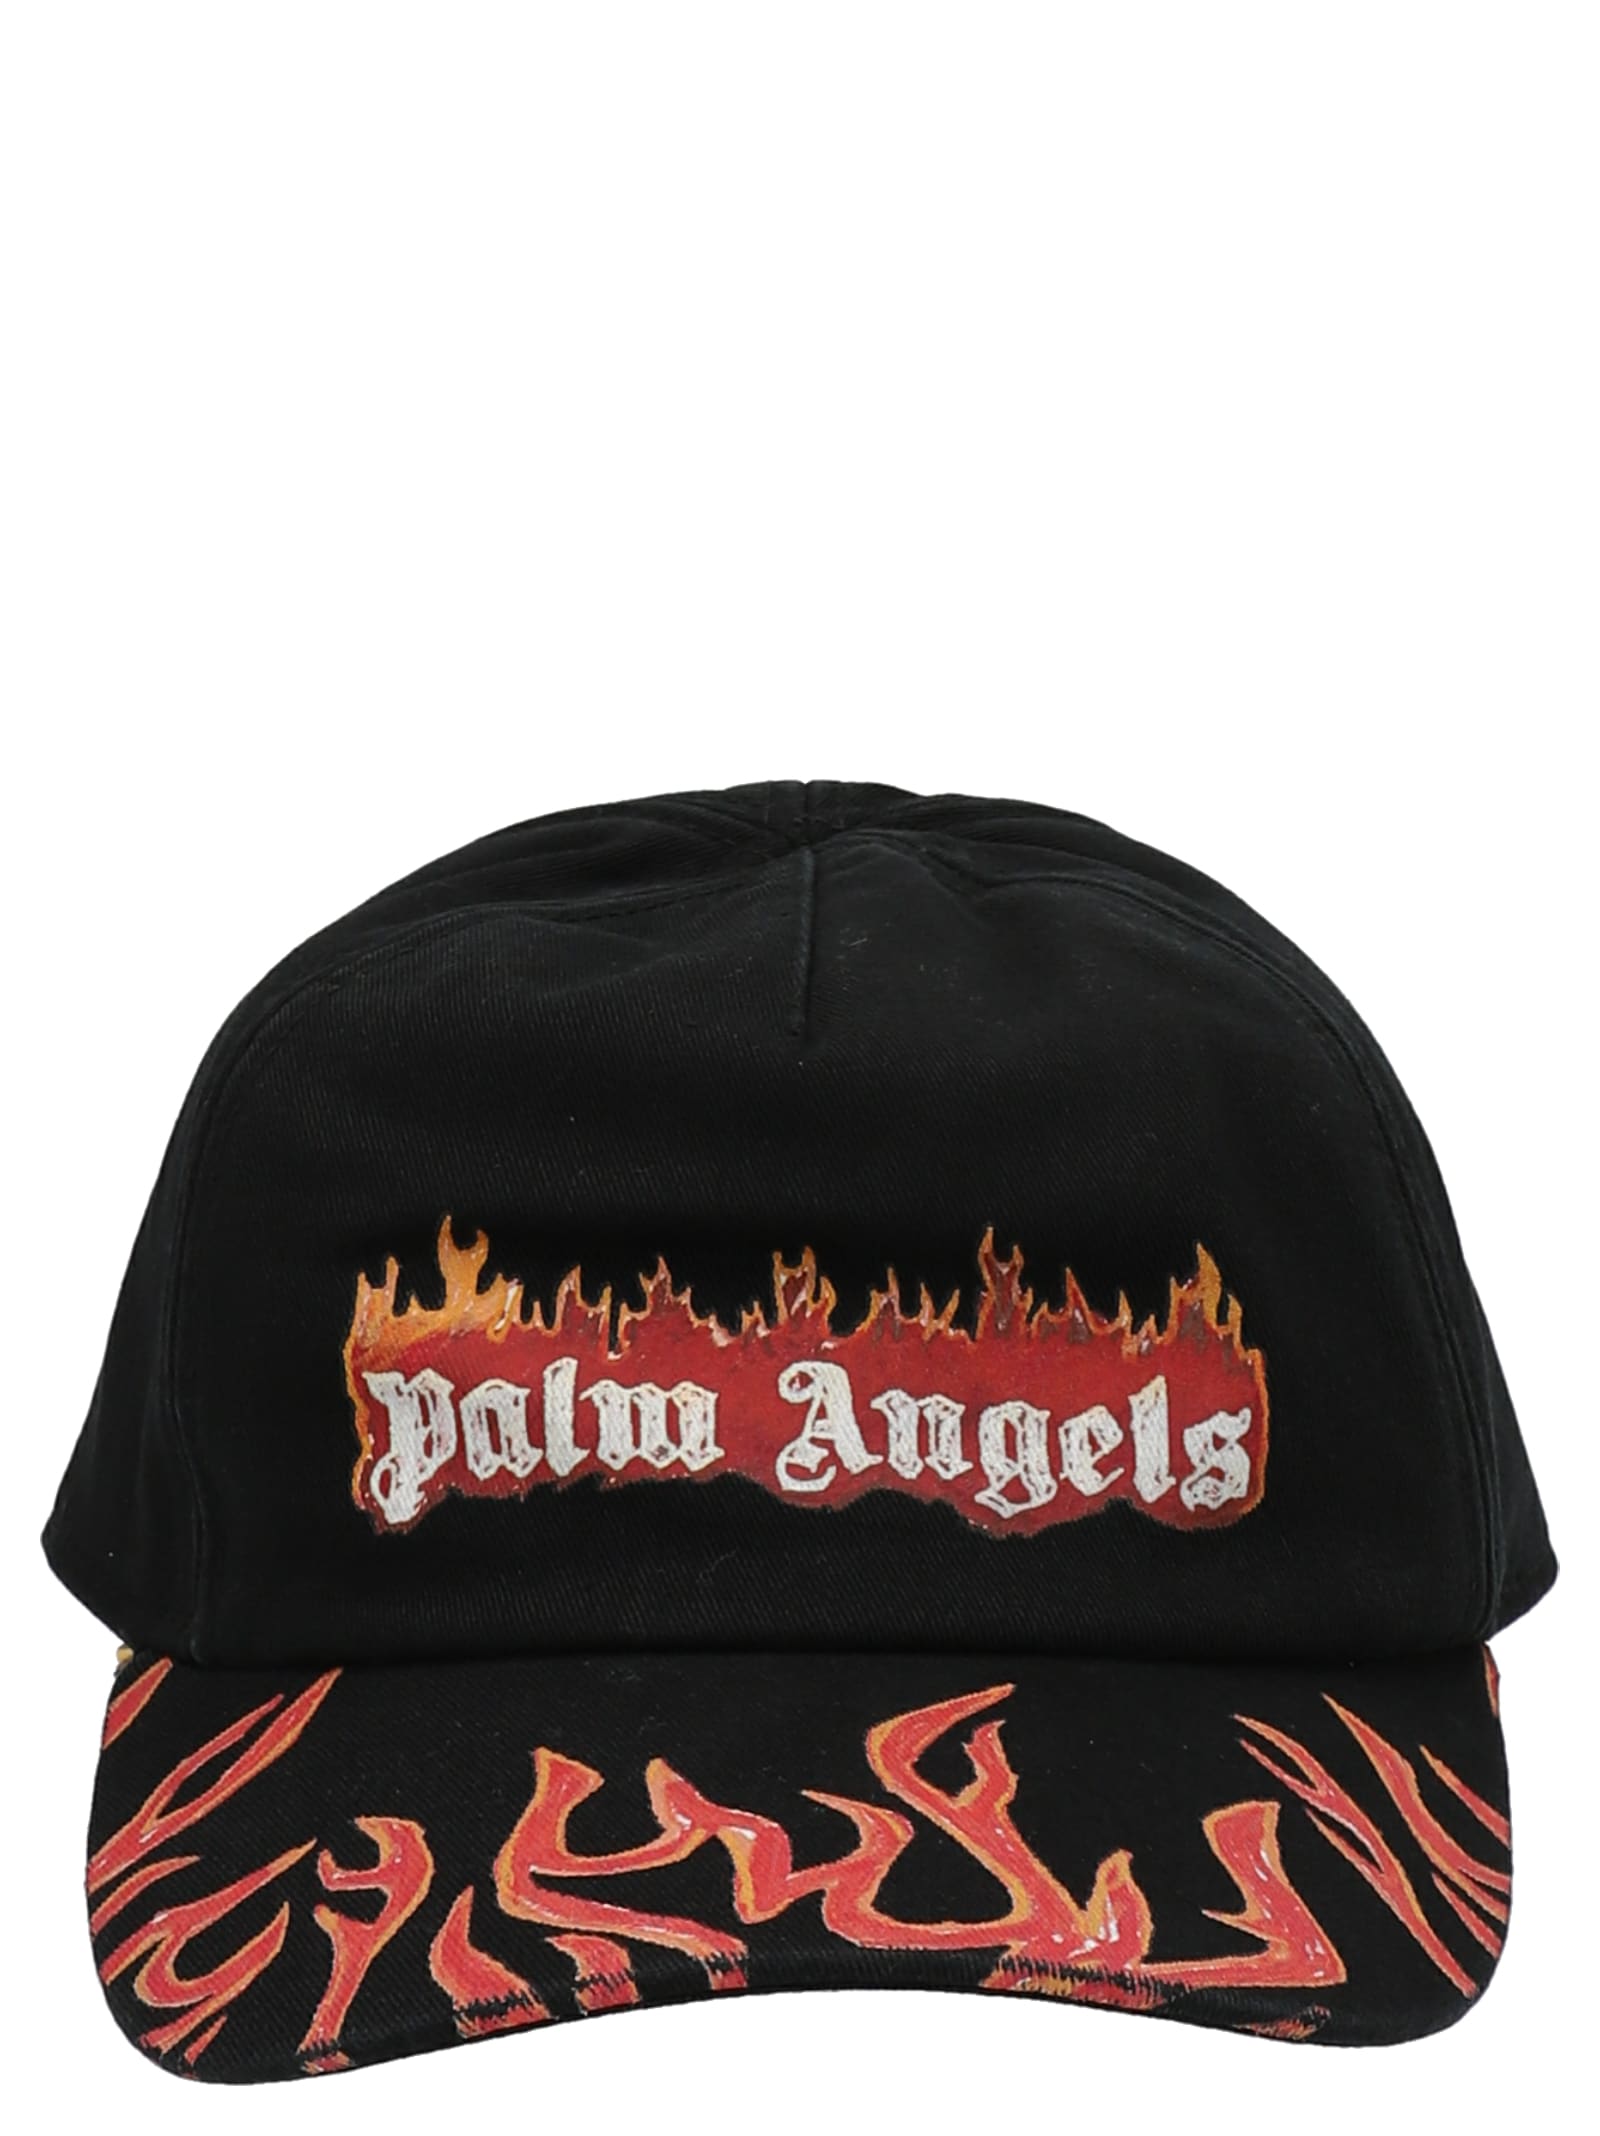 Palm Angels burning Logo Cap